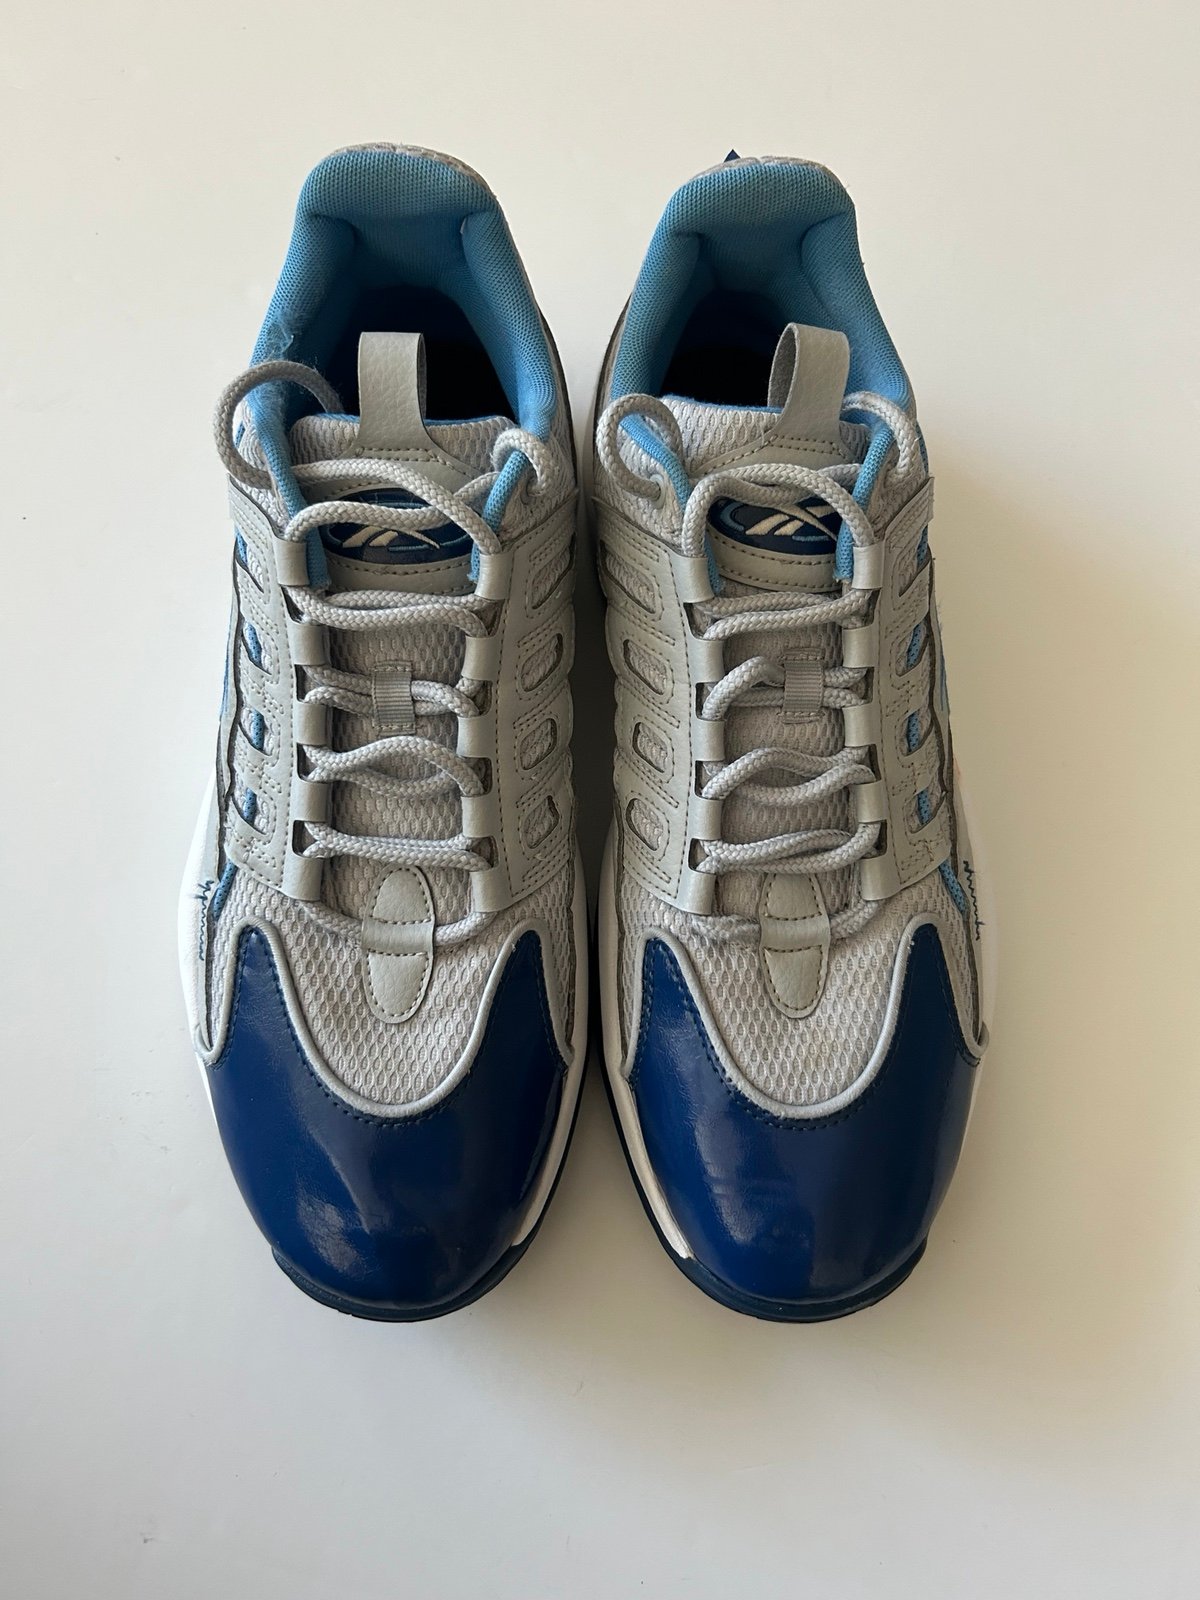 Reebok Solution Mid Basketball Shoes SZ 11.5 Men’s Grey Blue & White QyeUgSkvz